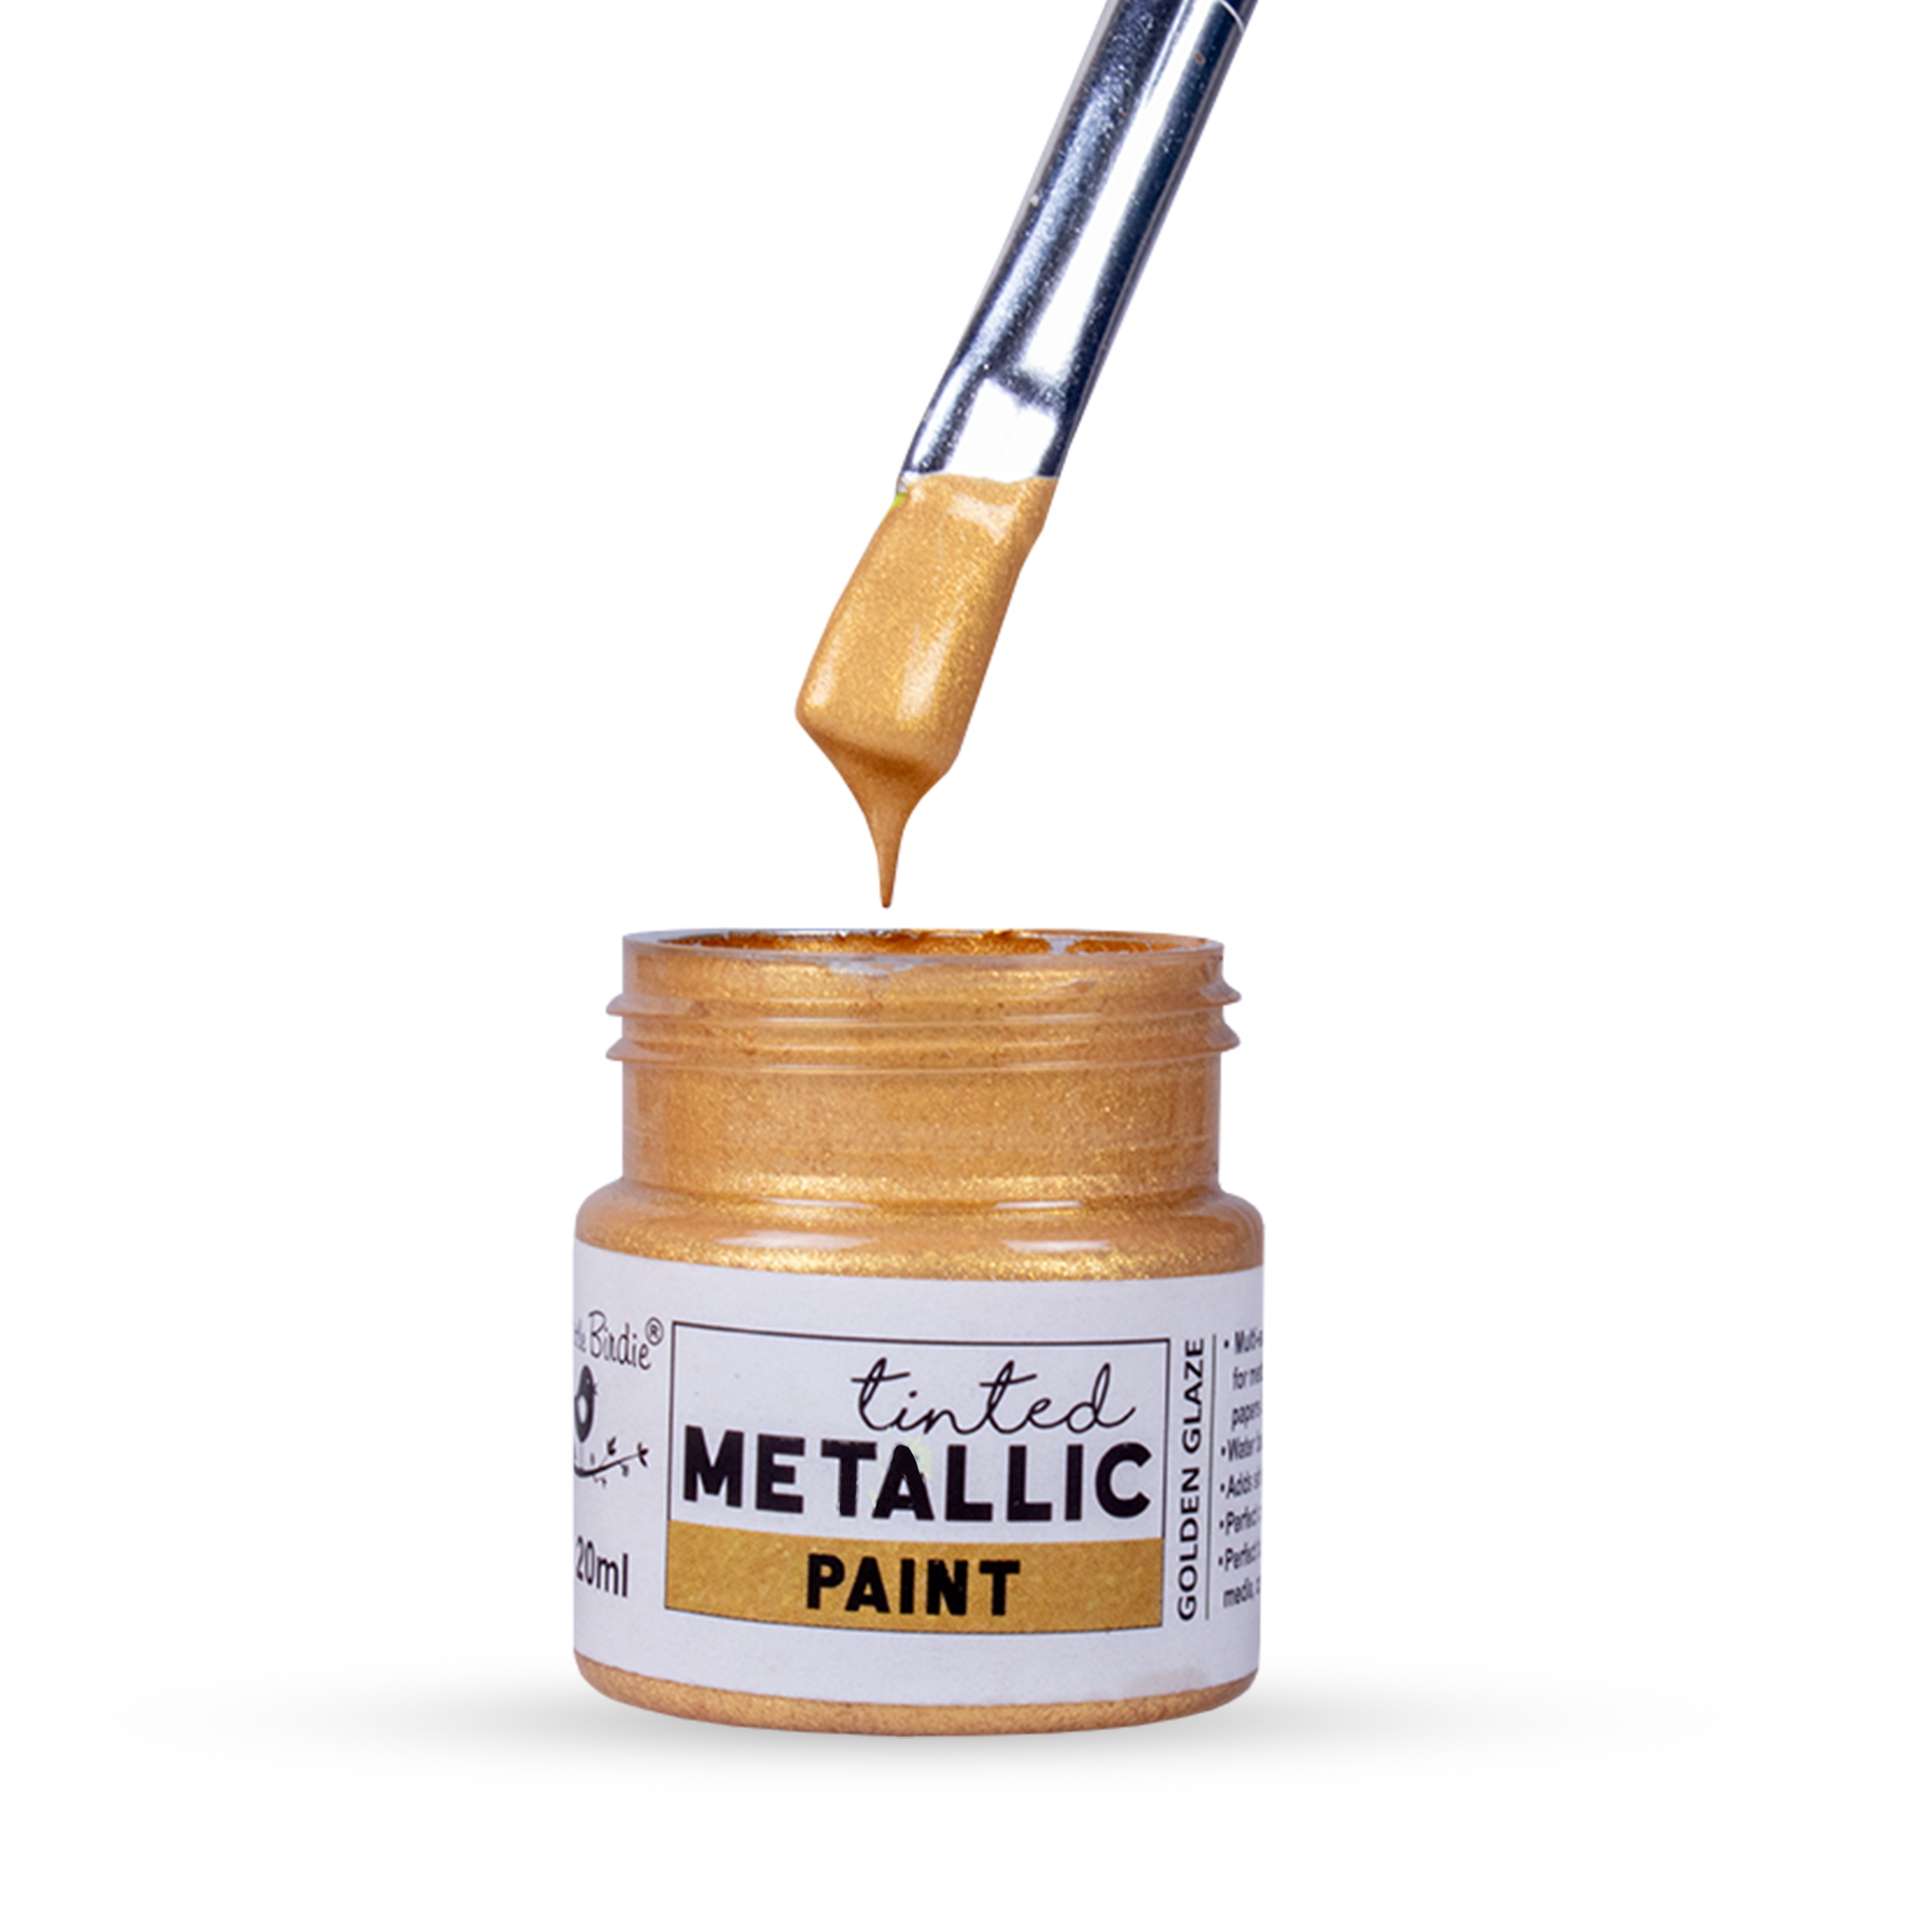 Tinted Metallic Paint Golden Glaze 20ml Bottle